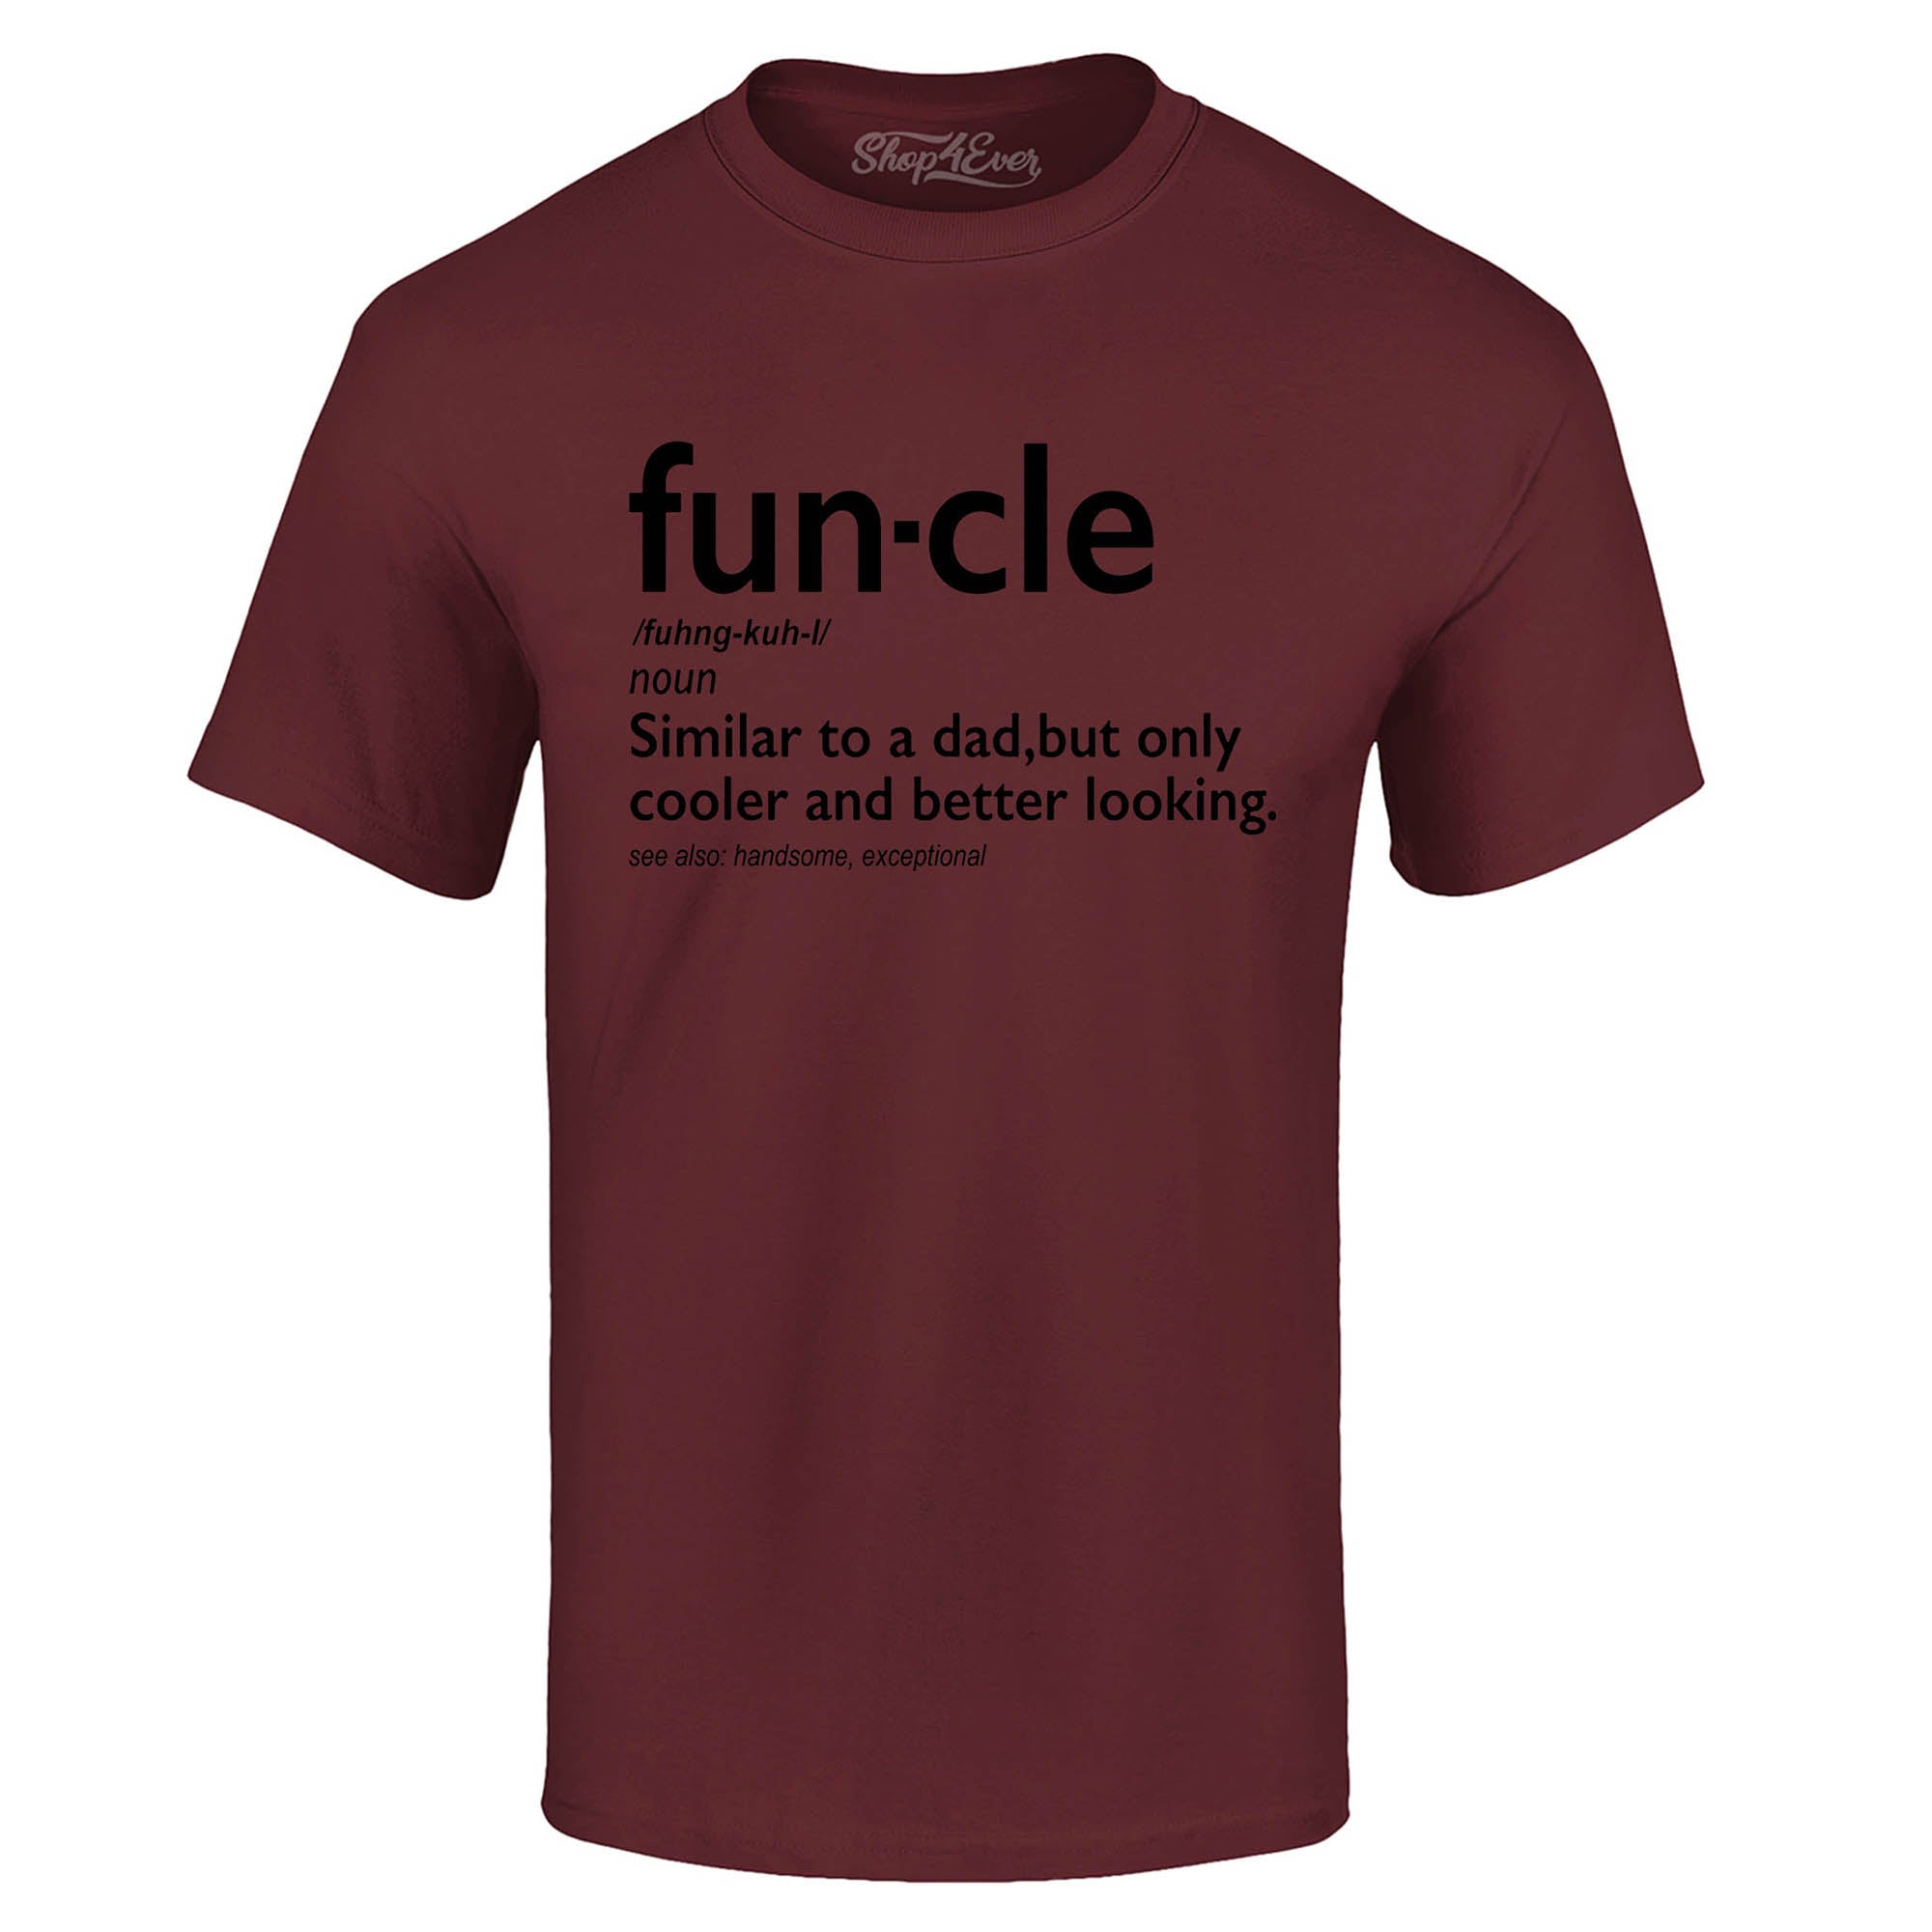 Fun-cle T-Shirt Uncle Shirts